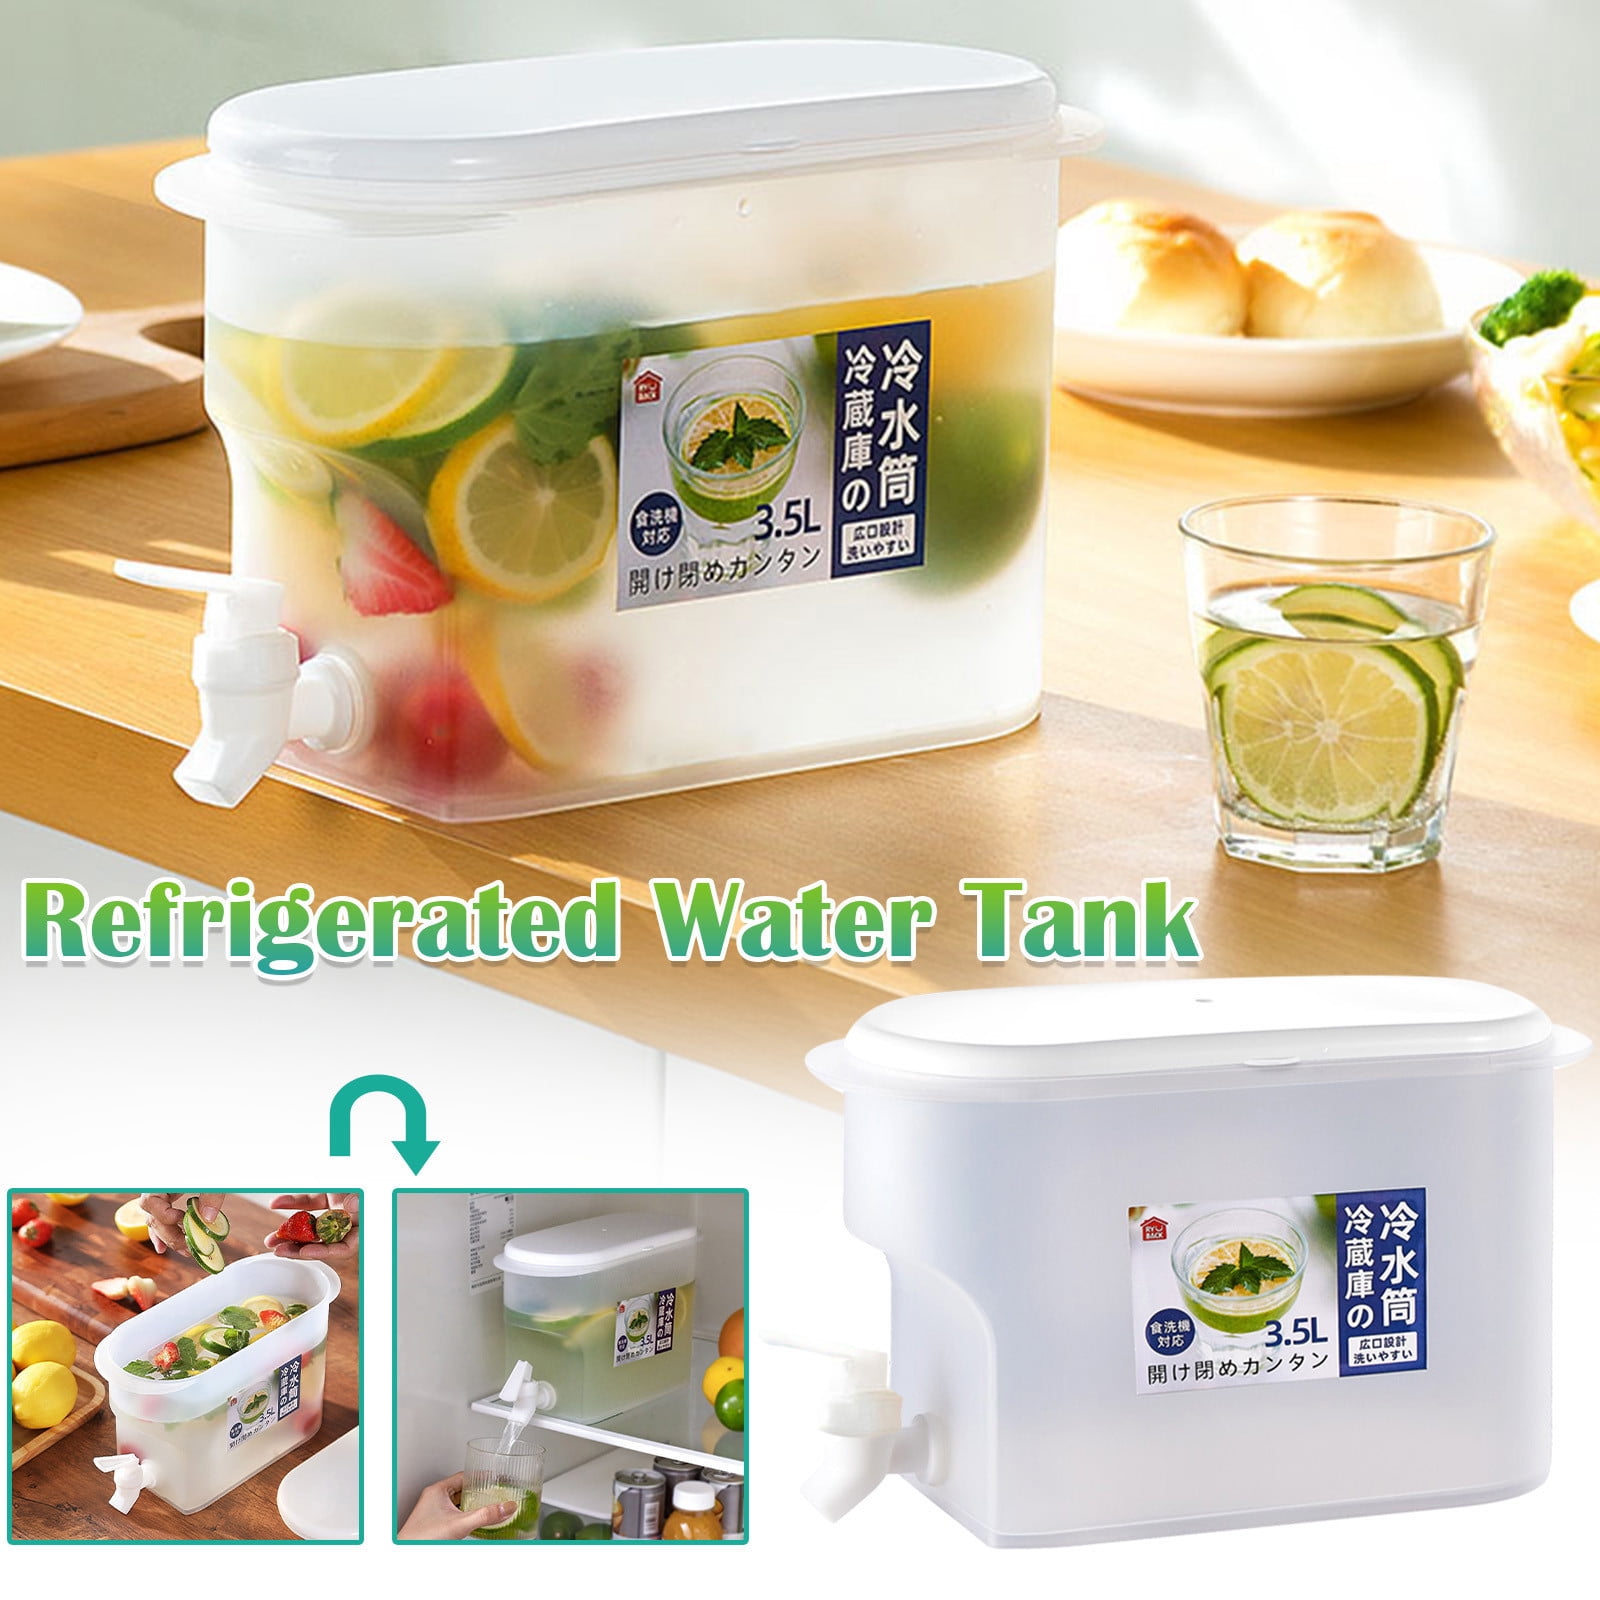 WYSRJ Cold Kettle with Faucet in Refrigerator, Drink Dispenser for Fridge,  Plastic Water Jugs Fruit Teapot Lemonade Bucket Drink Container for Fridge